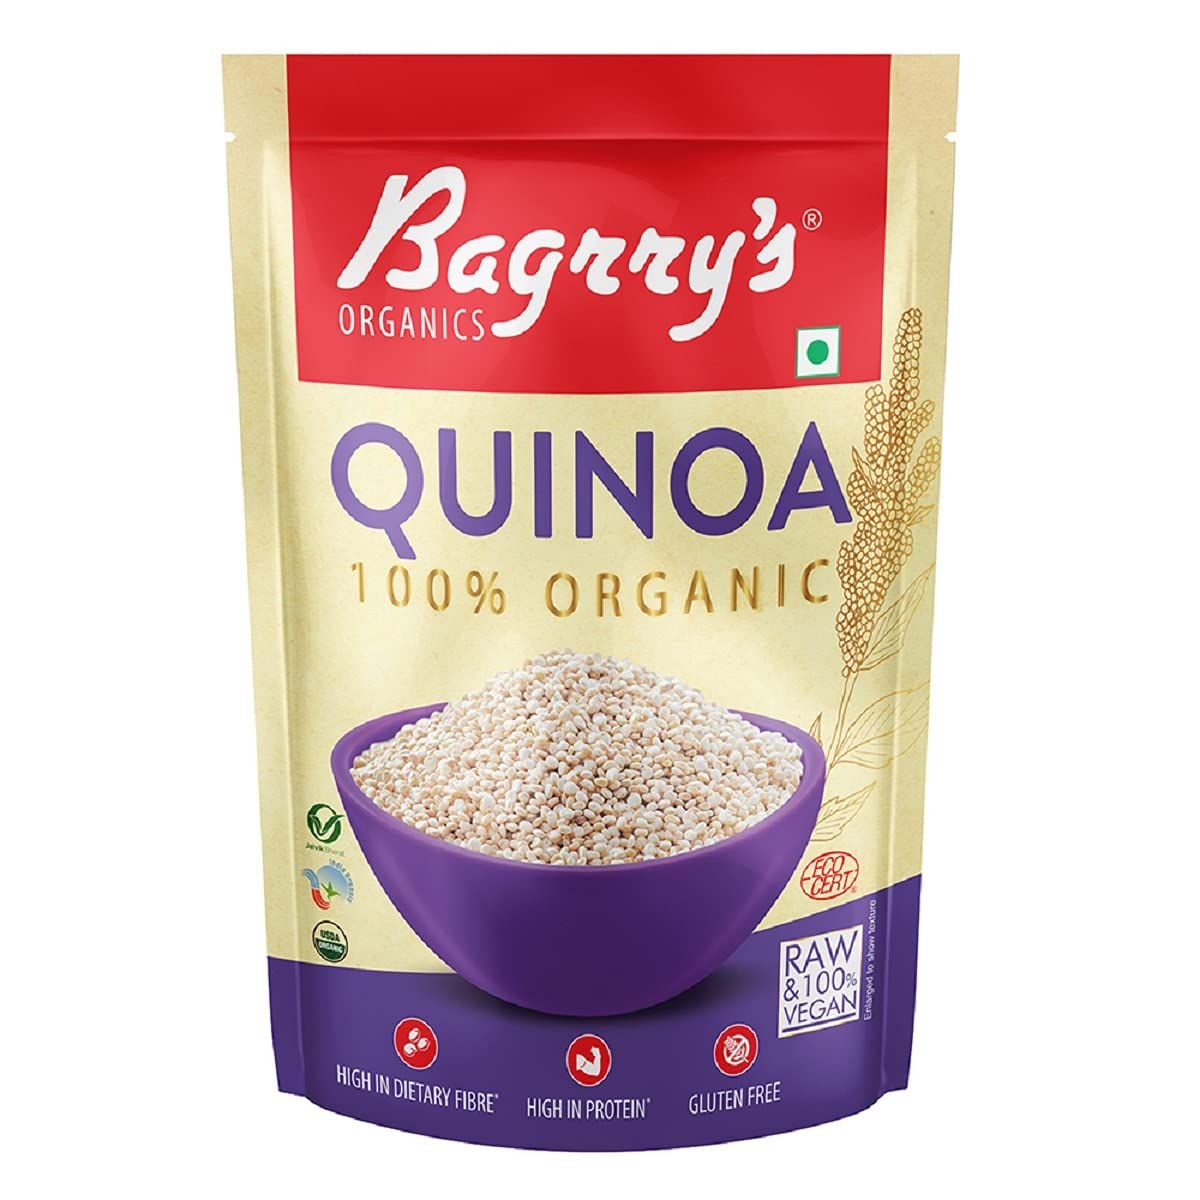 Bagrry's Organic Quinoa Image